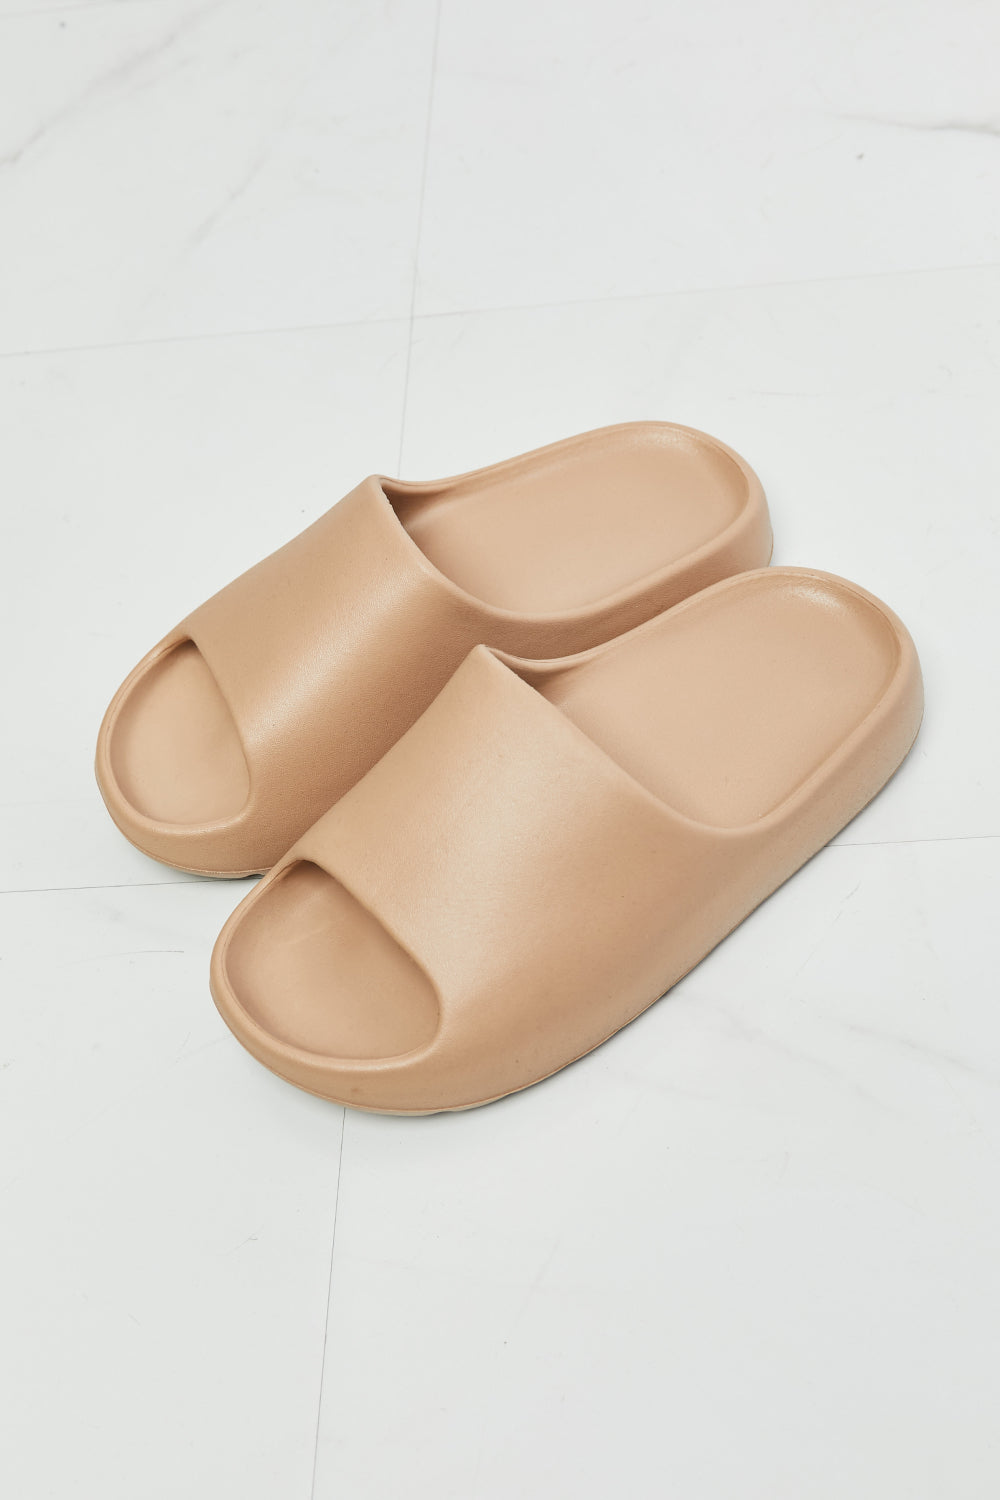 In My Comfort Zone Slides-Beige Sand Slides by Vim&Vigor | Vim&Vigor Boutique